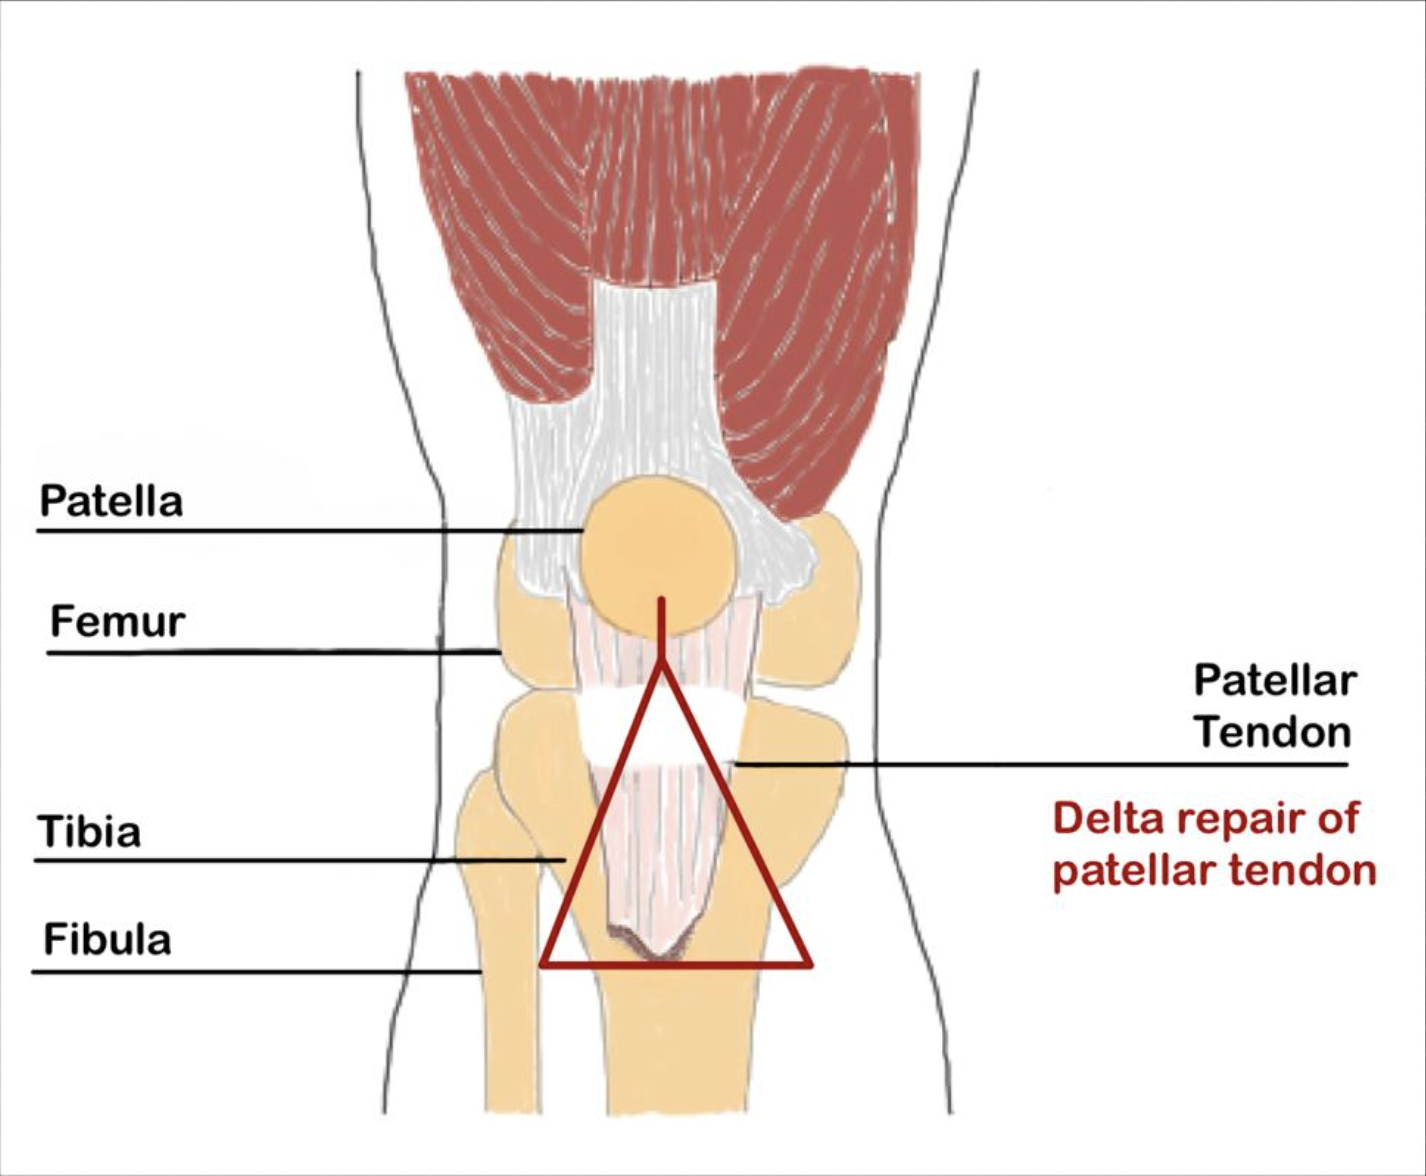 Patella Tendon Rupture - Atlantic Orthopaedic Specialists